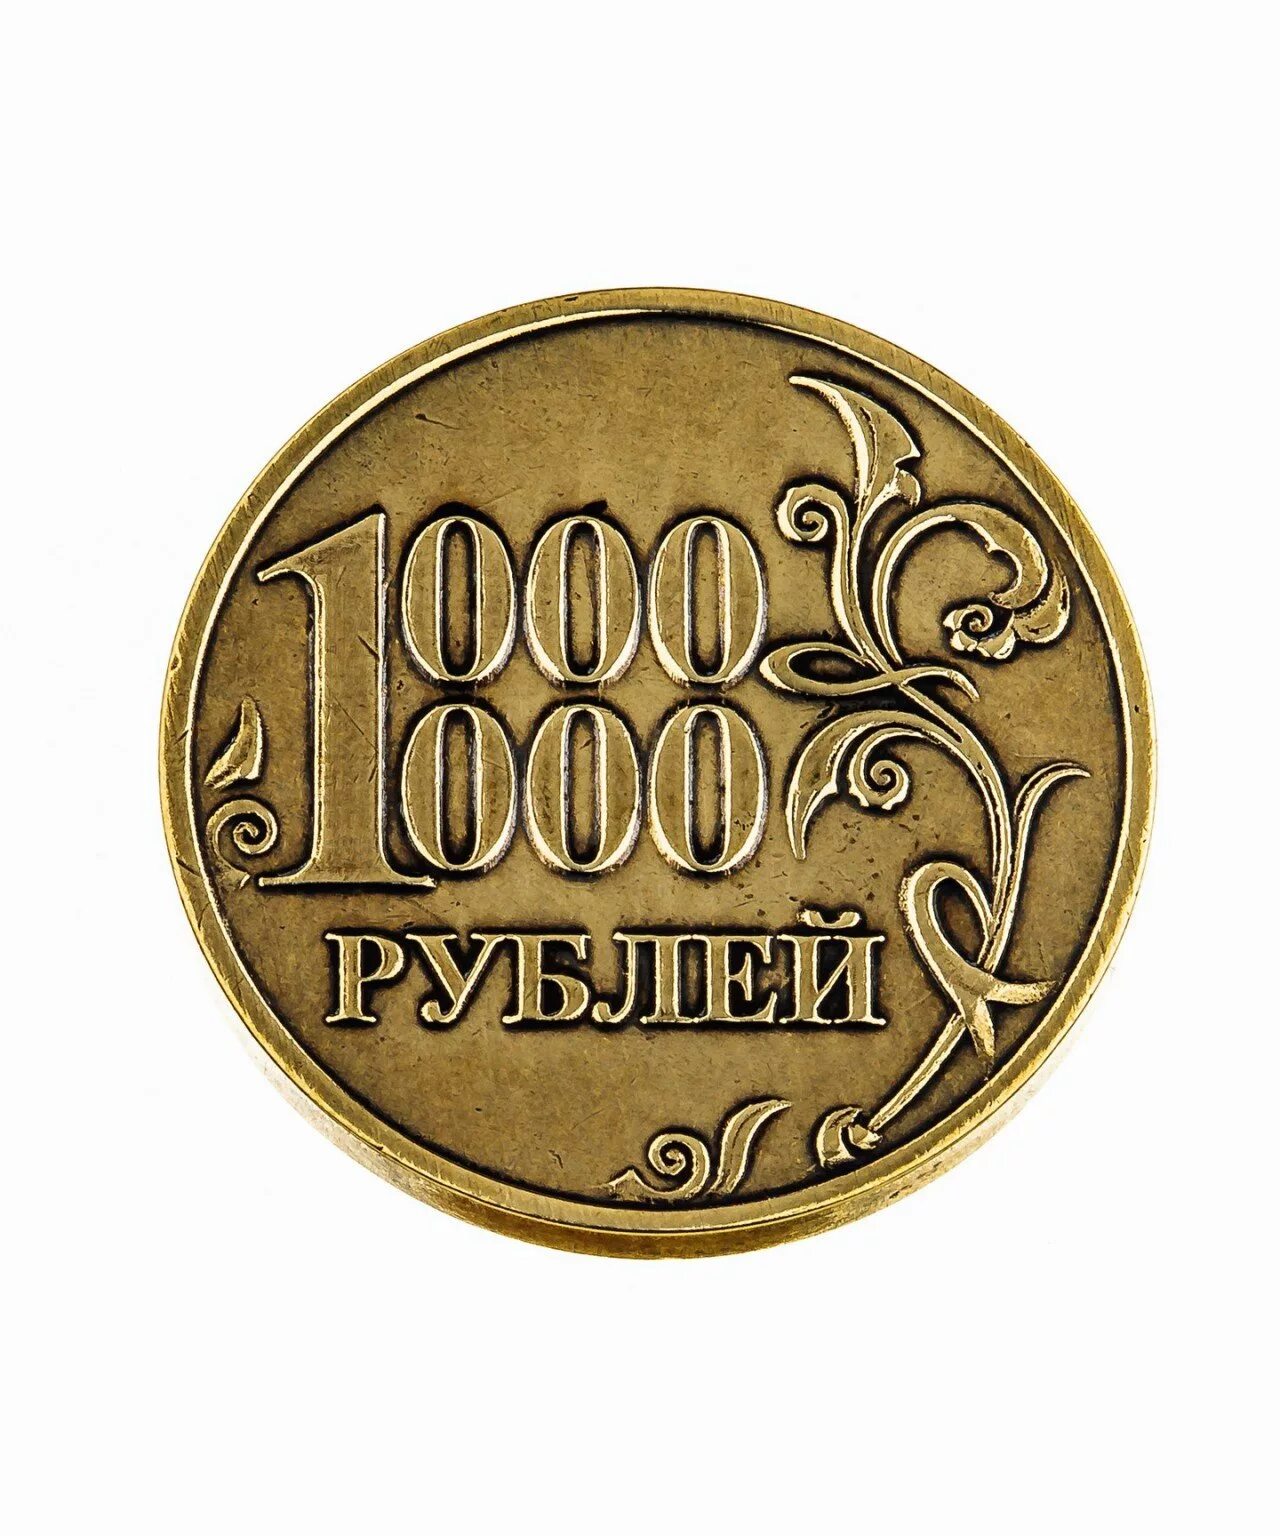 Монета миллион рублей. Монета 1 милион рубле й. Сонета 1 миллион рублей. Монета 1 миллион рублей. 2500 цена в рублях